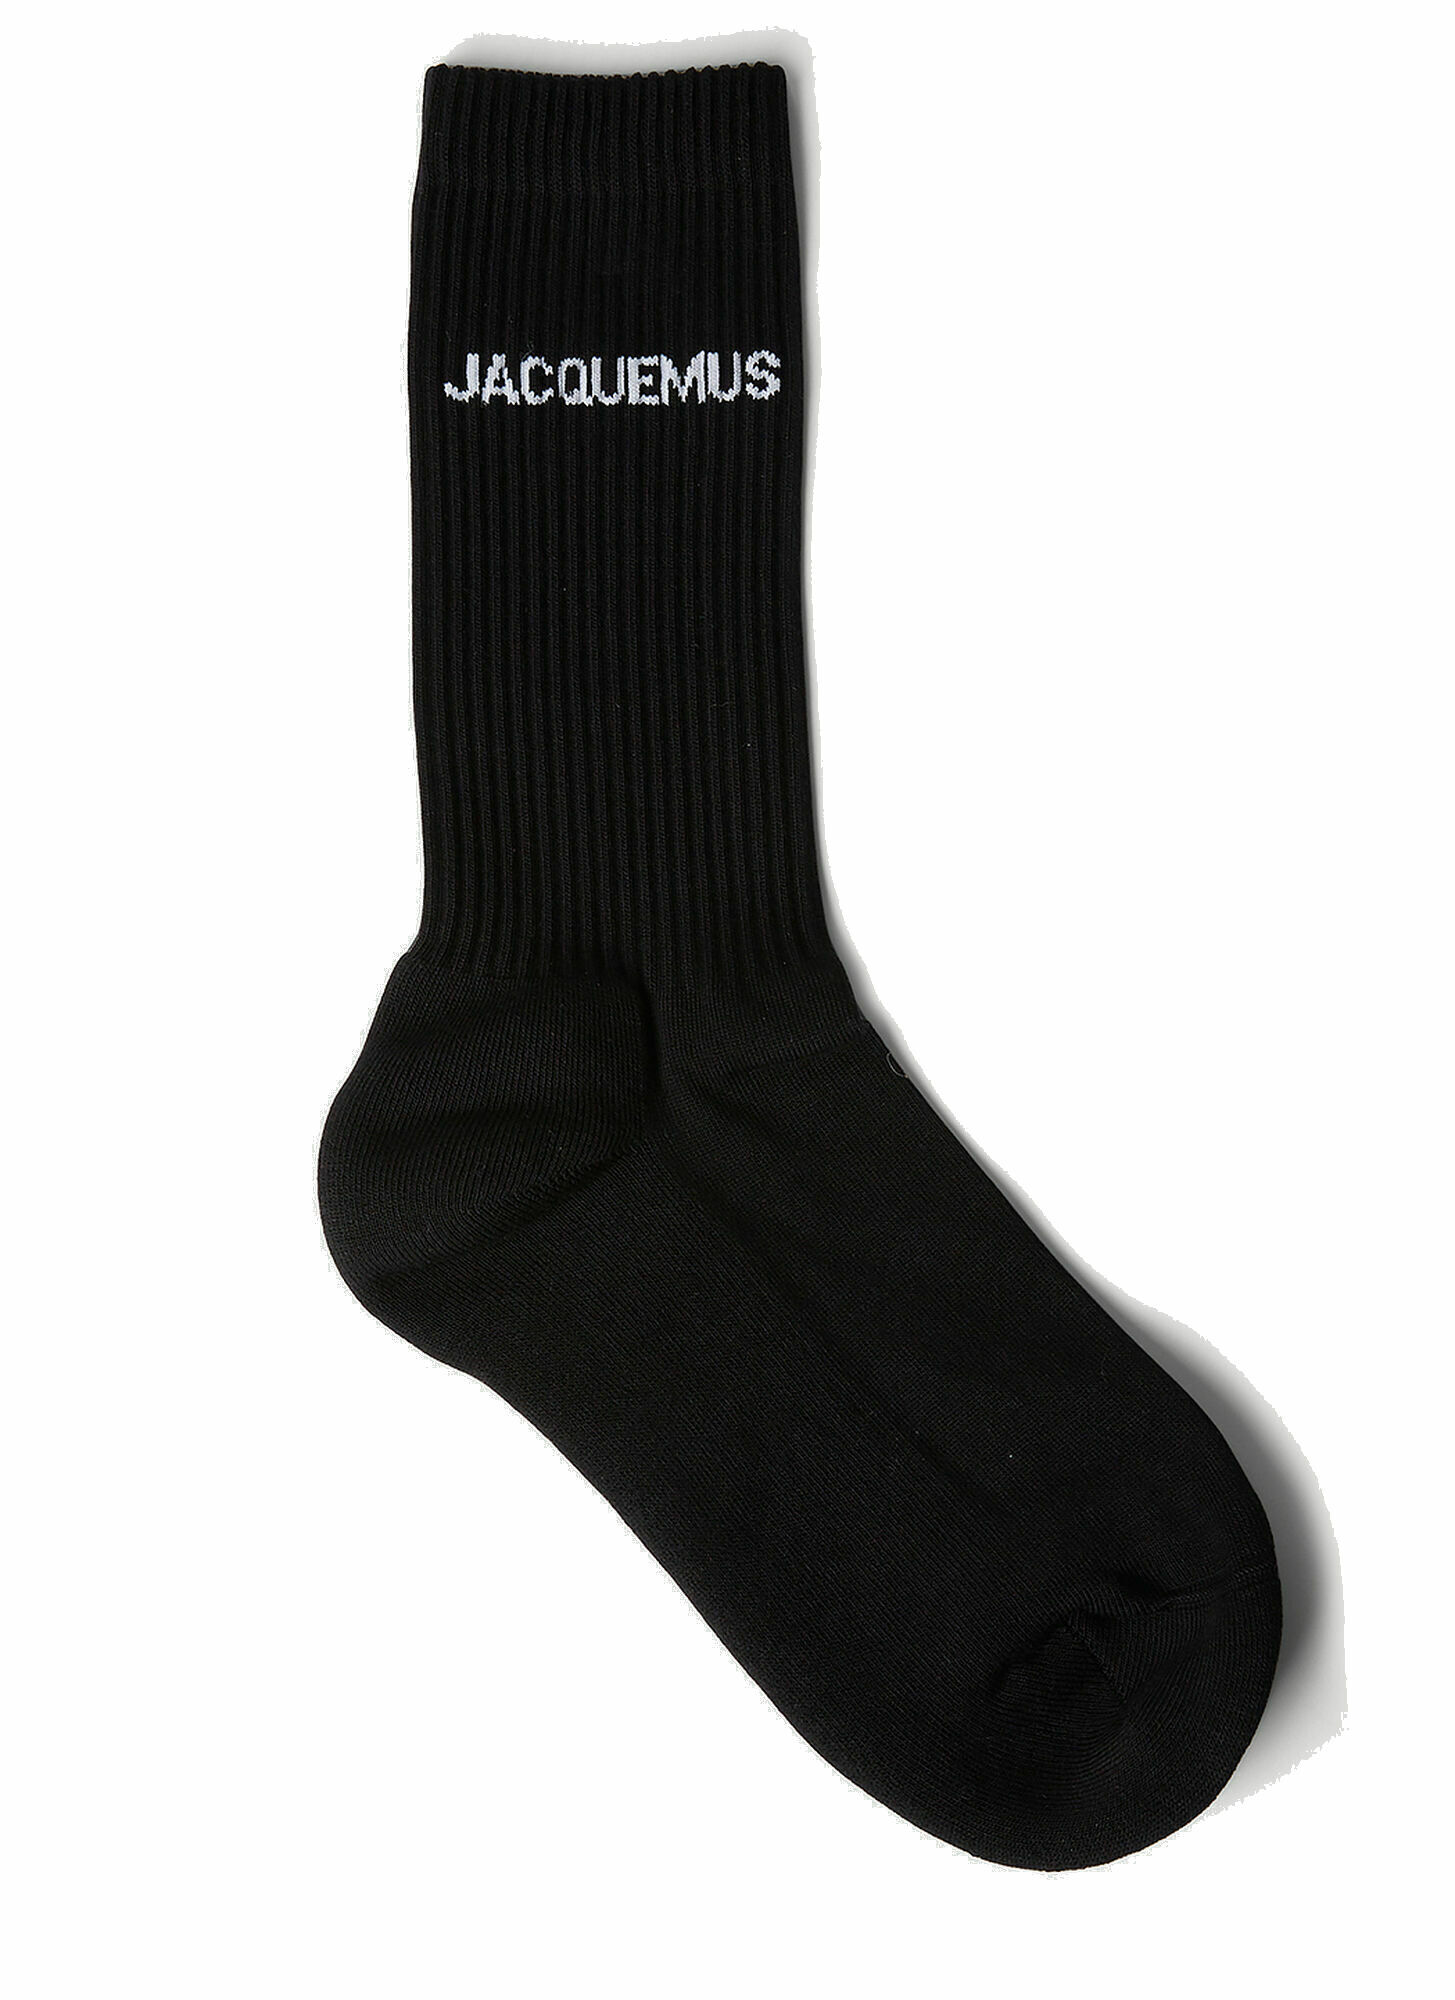 Jacquemus - Les Chaussettes Socks in Black Jacquemus